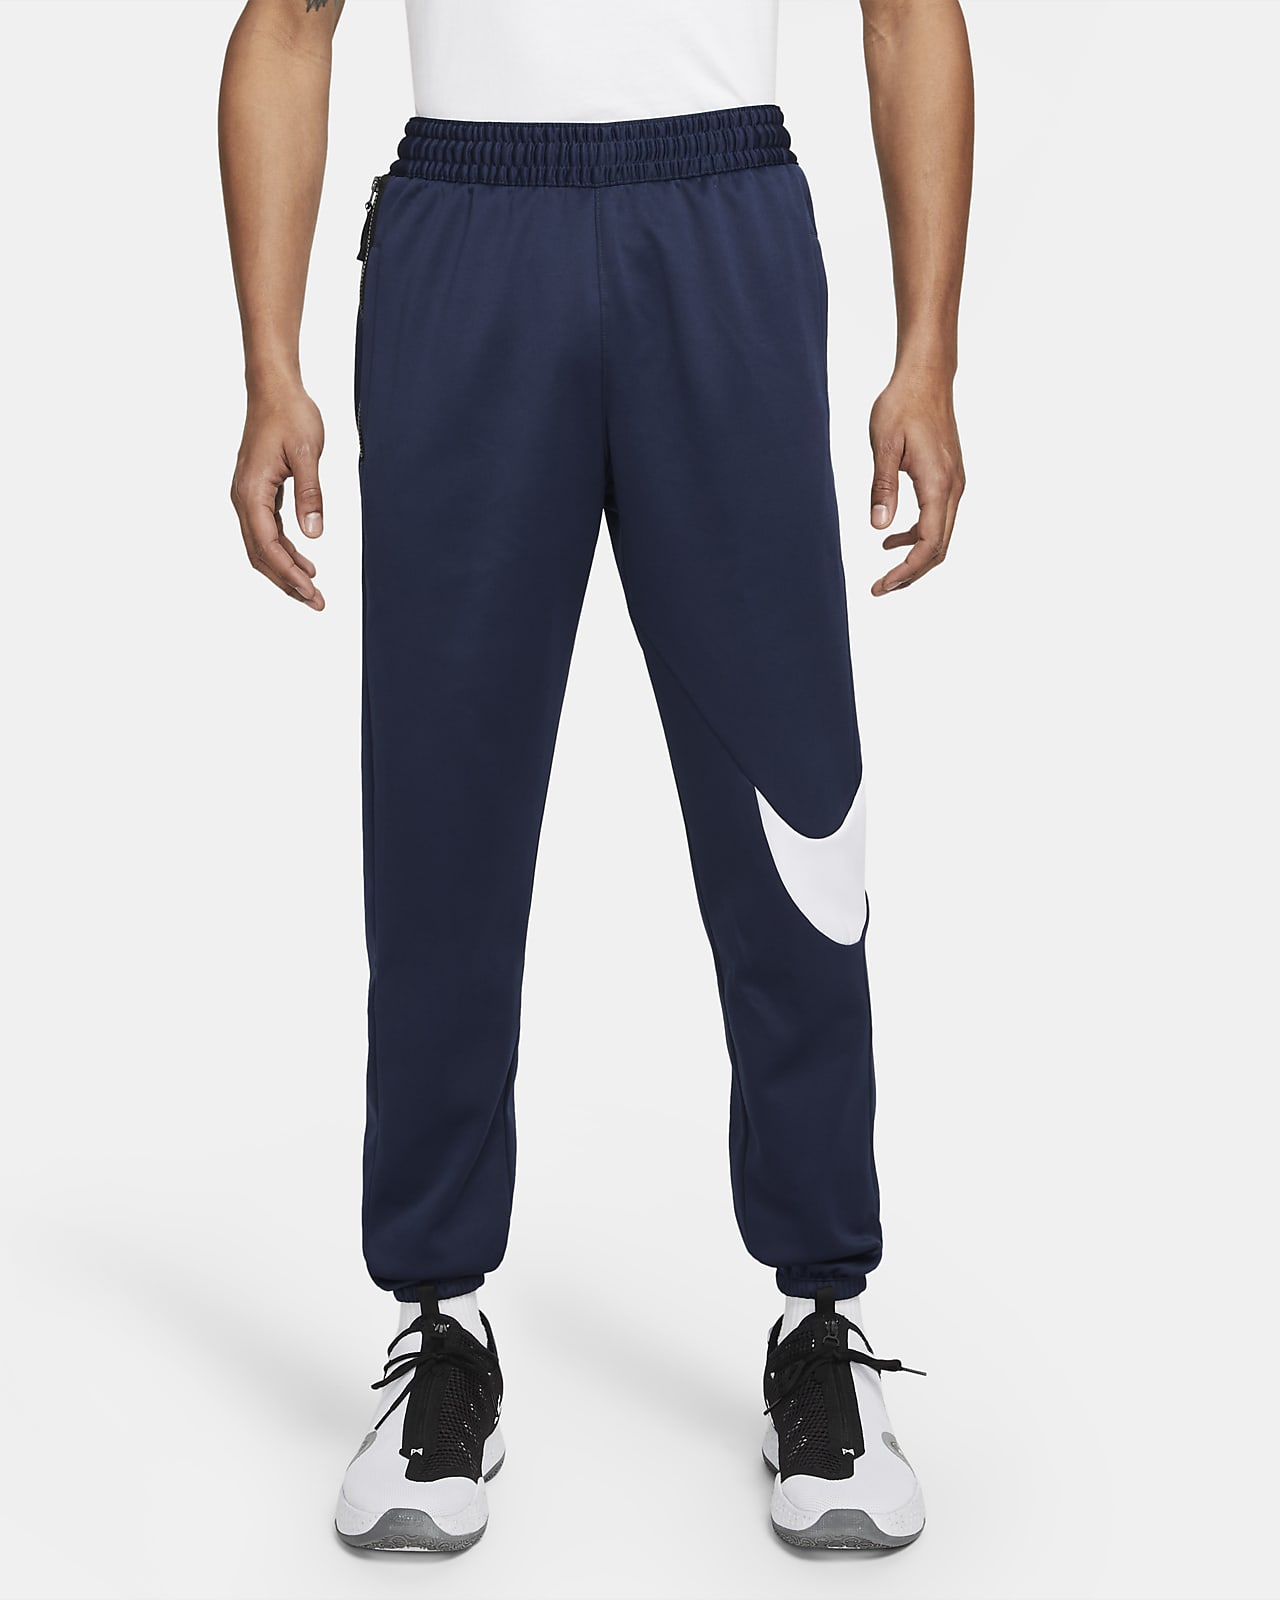 Nike Therma Men's Basketball Pants